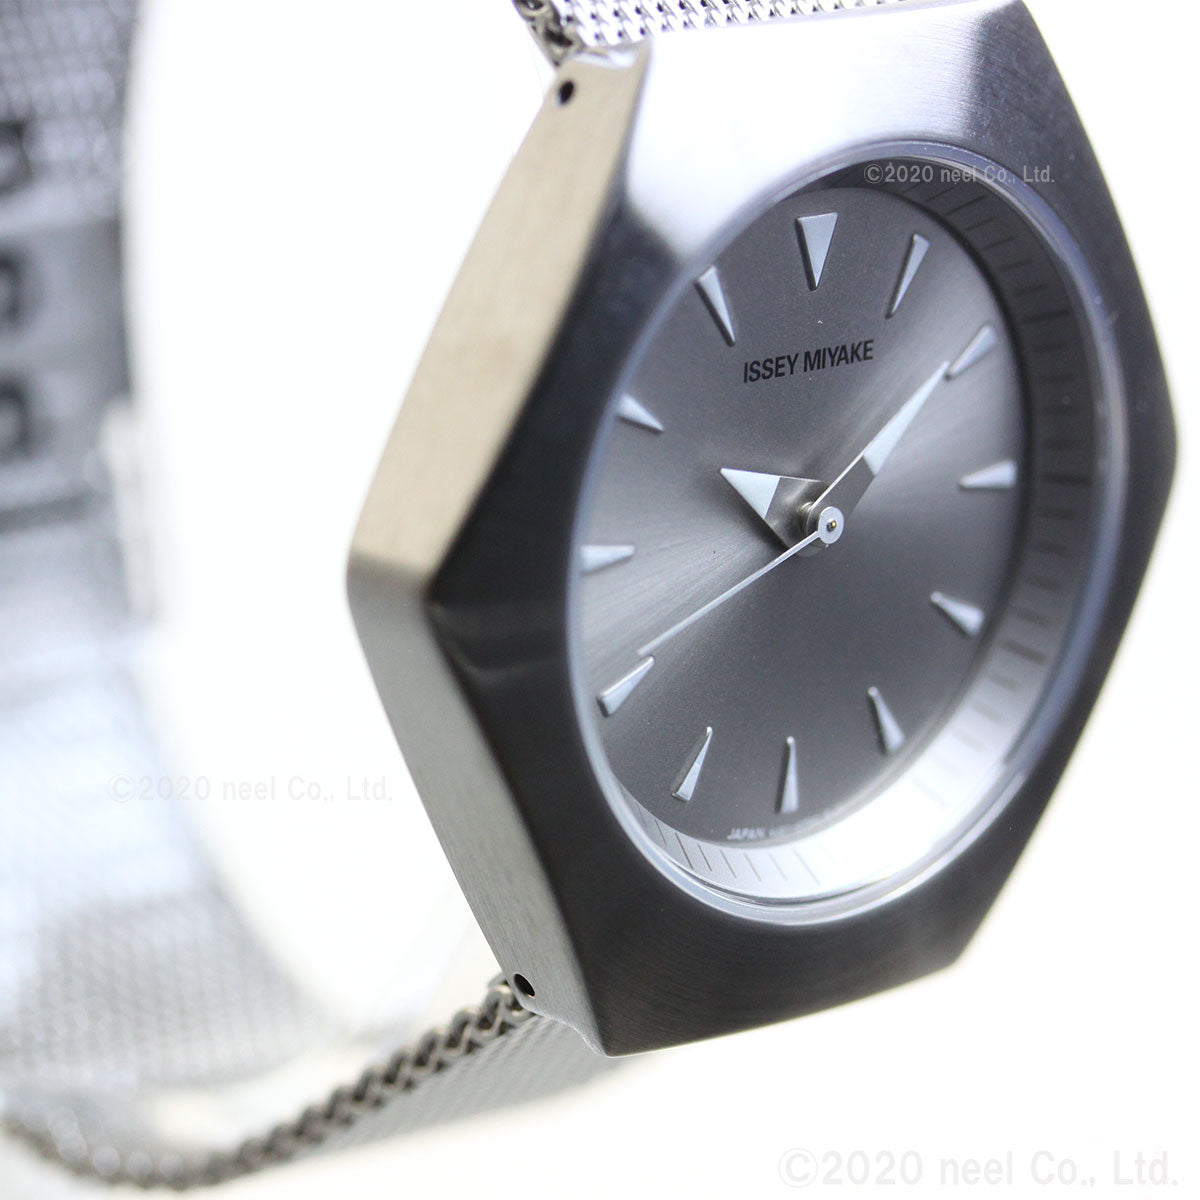 ISSEY MIYAKE 腕時計 メンズ NYAM001 ミヤケ ロクシリーズ クオーツ（VJ21） シルバーxシルバー アナログ表示